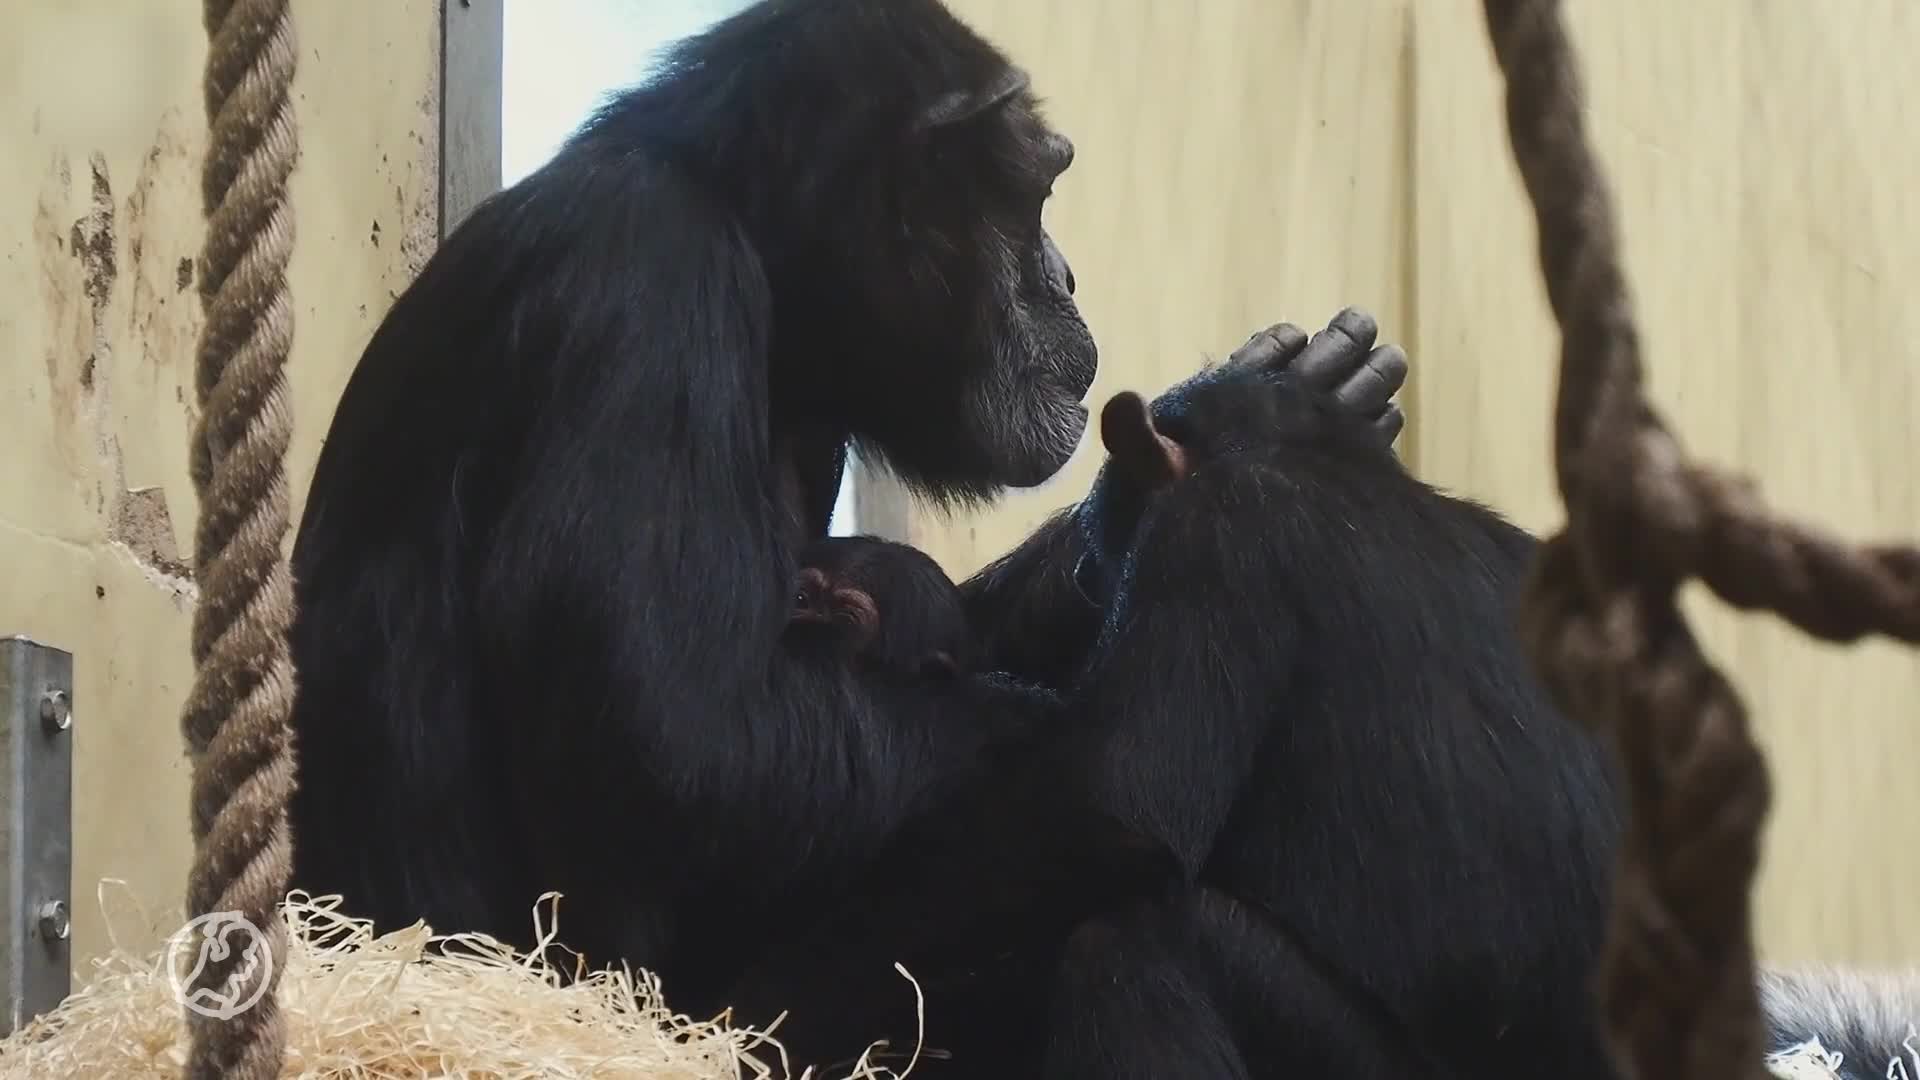 Verrassing! Zeer bedreigde chimpansee geboren in dierenpark Beekse Bergen